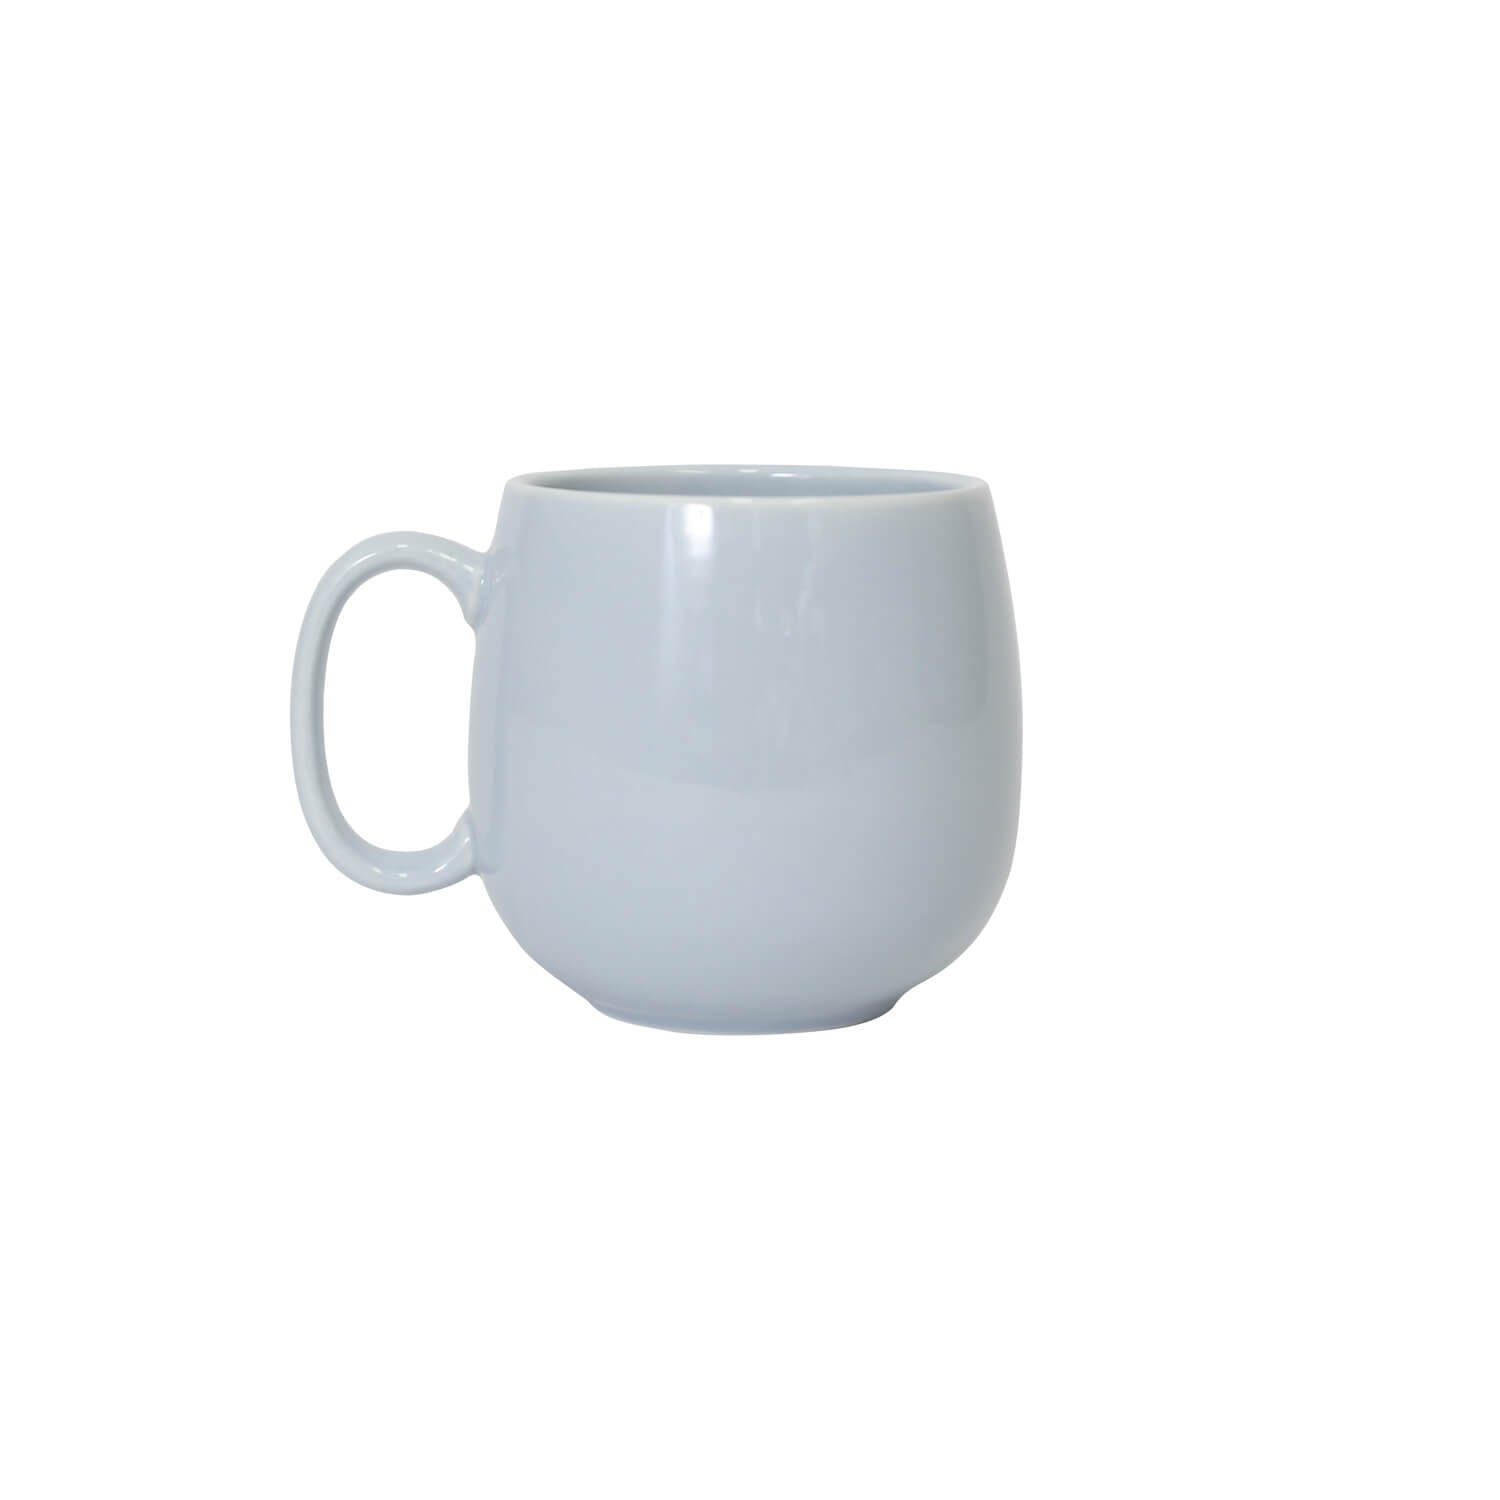 Splosh Colour Pop Mug - Simple